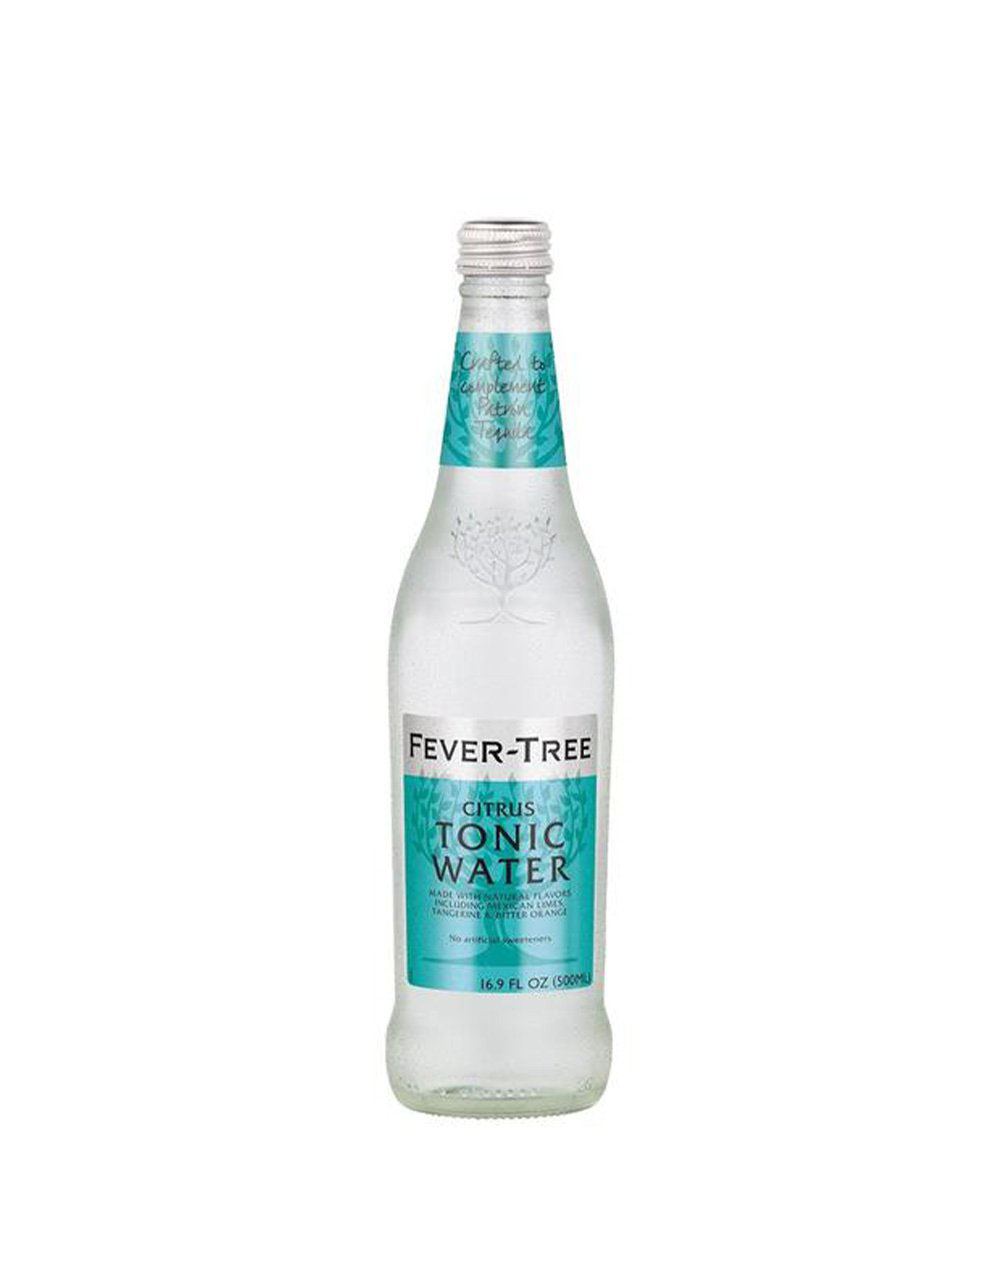 Fever-Tree Citrus Tonic Water